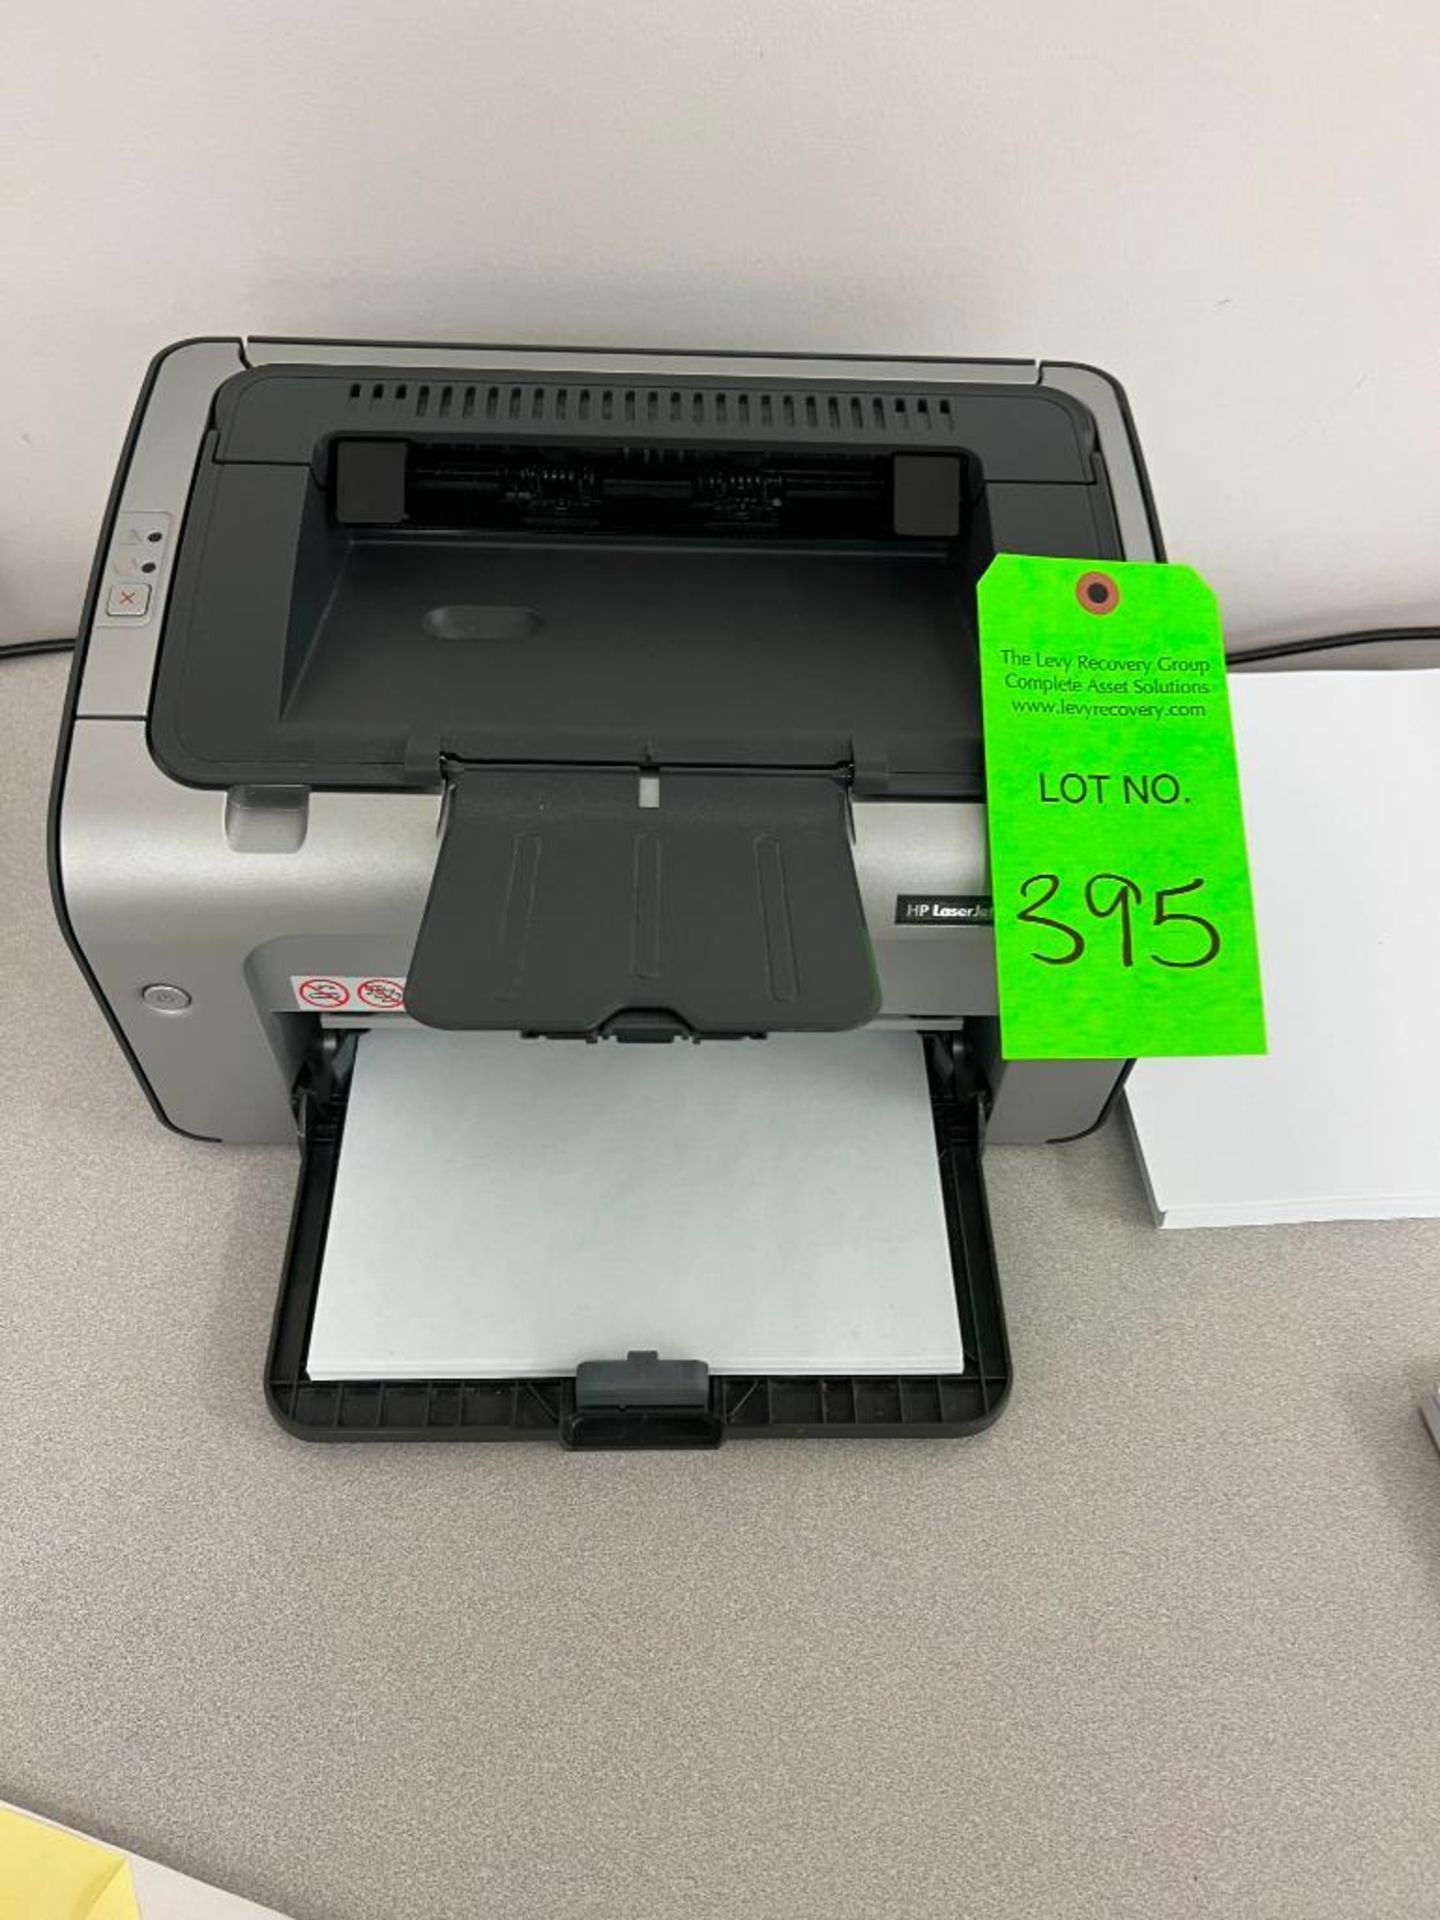 Hewlett-Packard LaserJet P1006 Printer